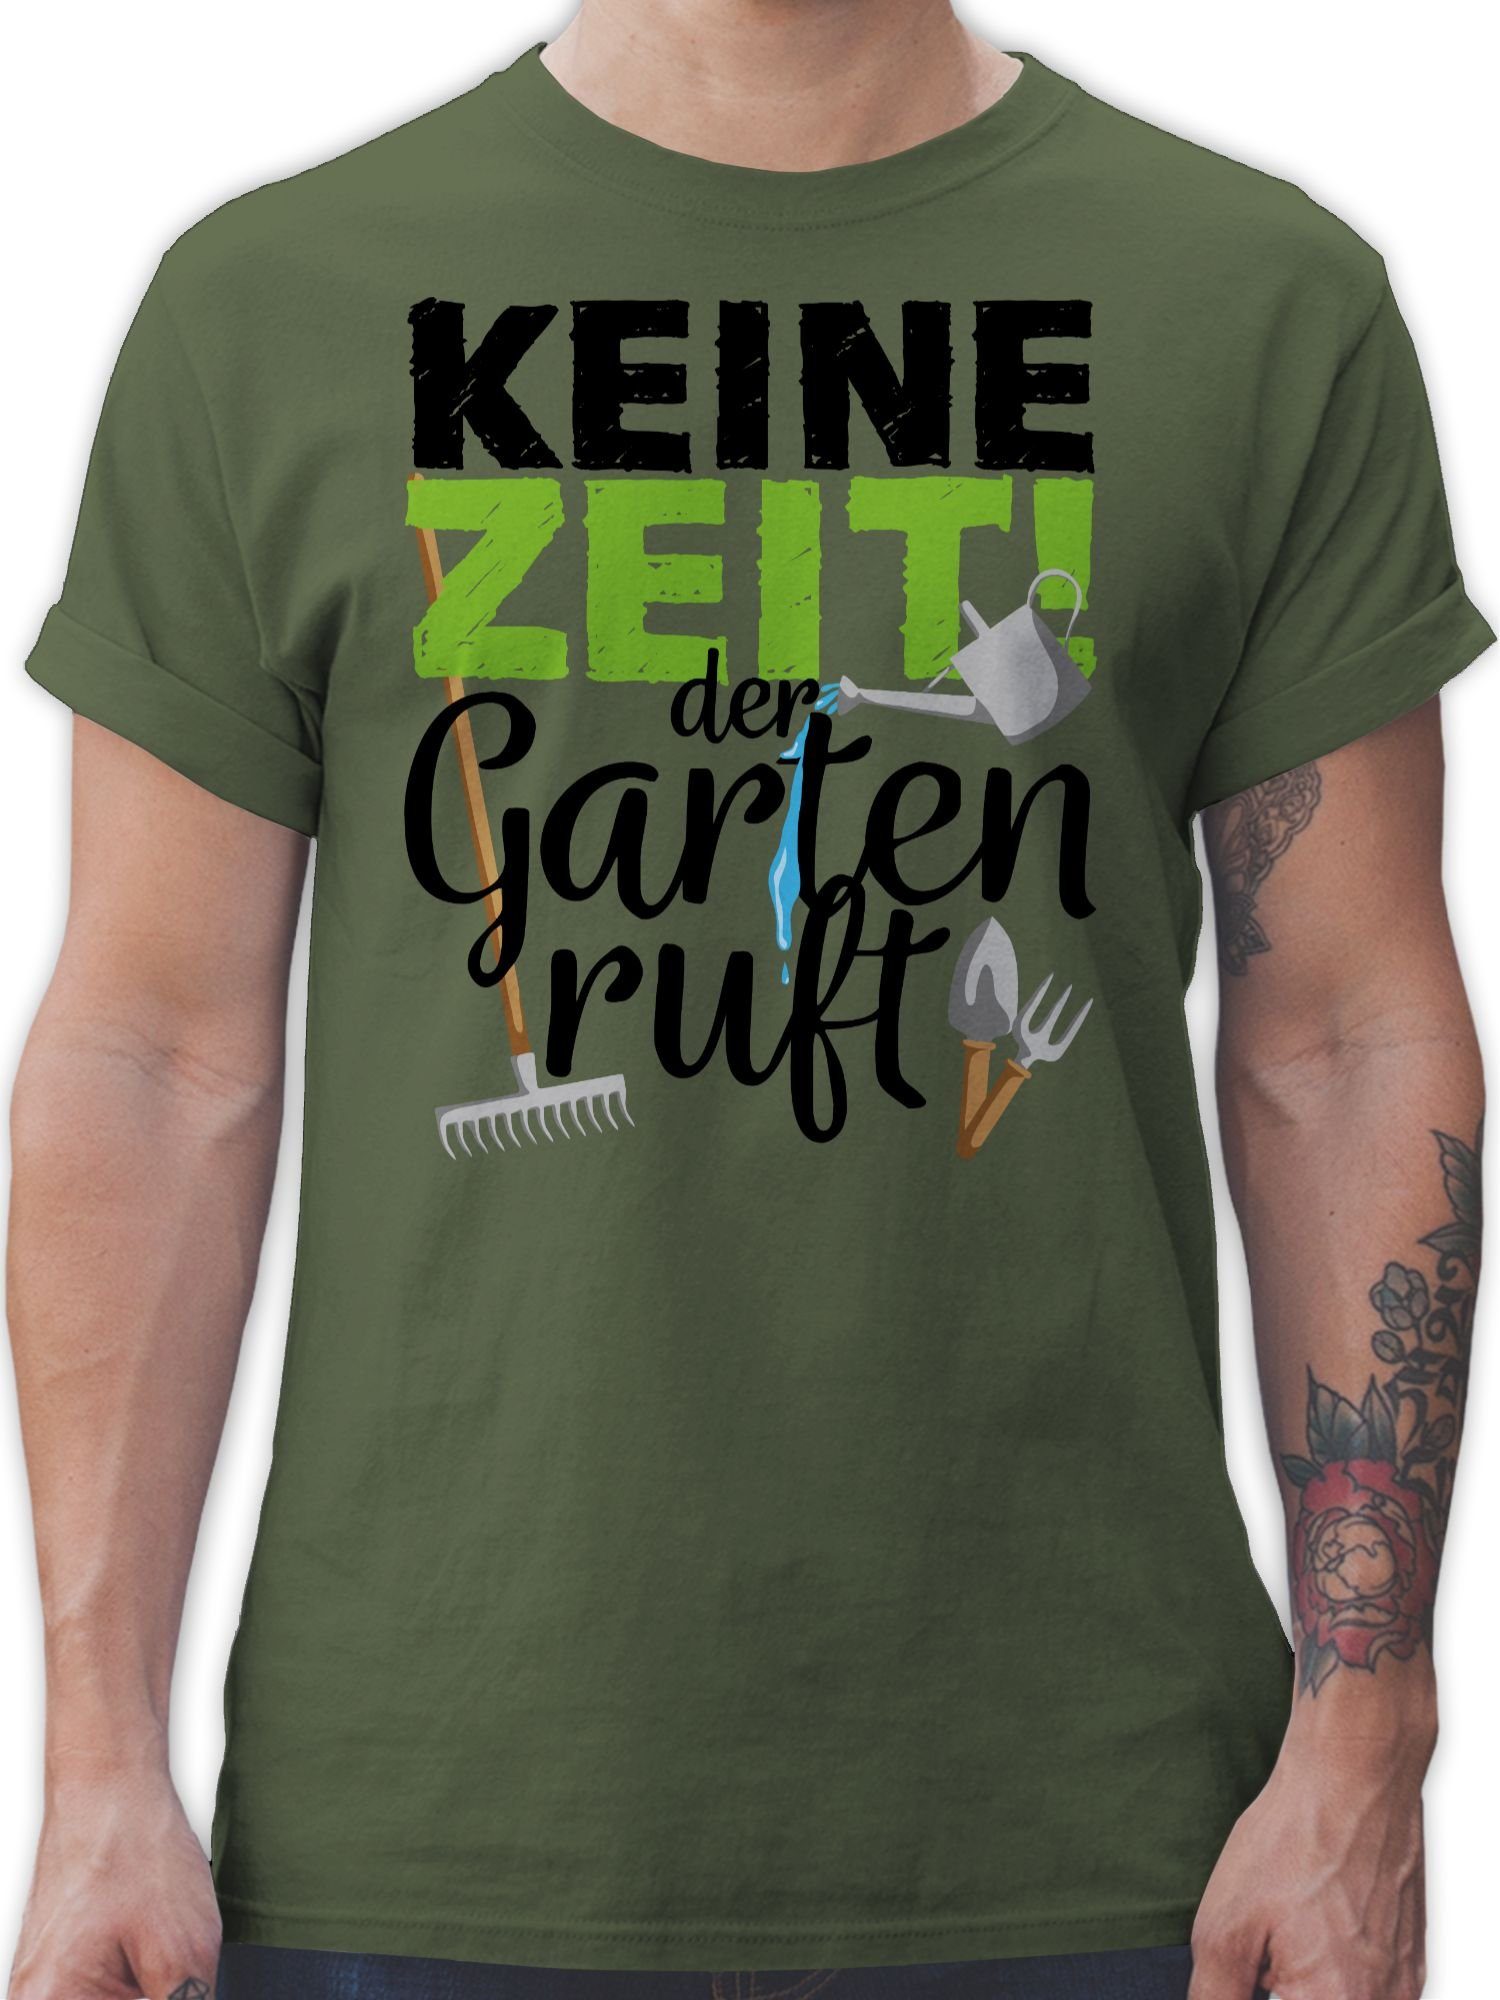 ruft Outfit Garten 1 - Keine der Gartengeräte Grün T-Shirt Army Shirtracer Zeit Hobby